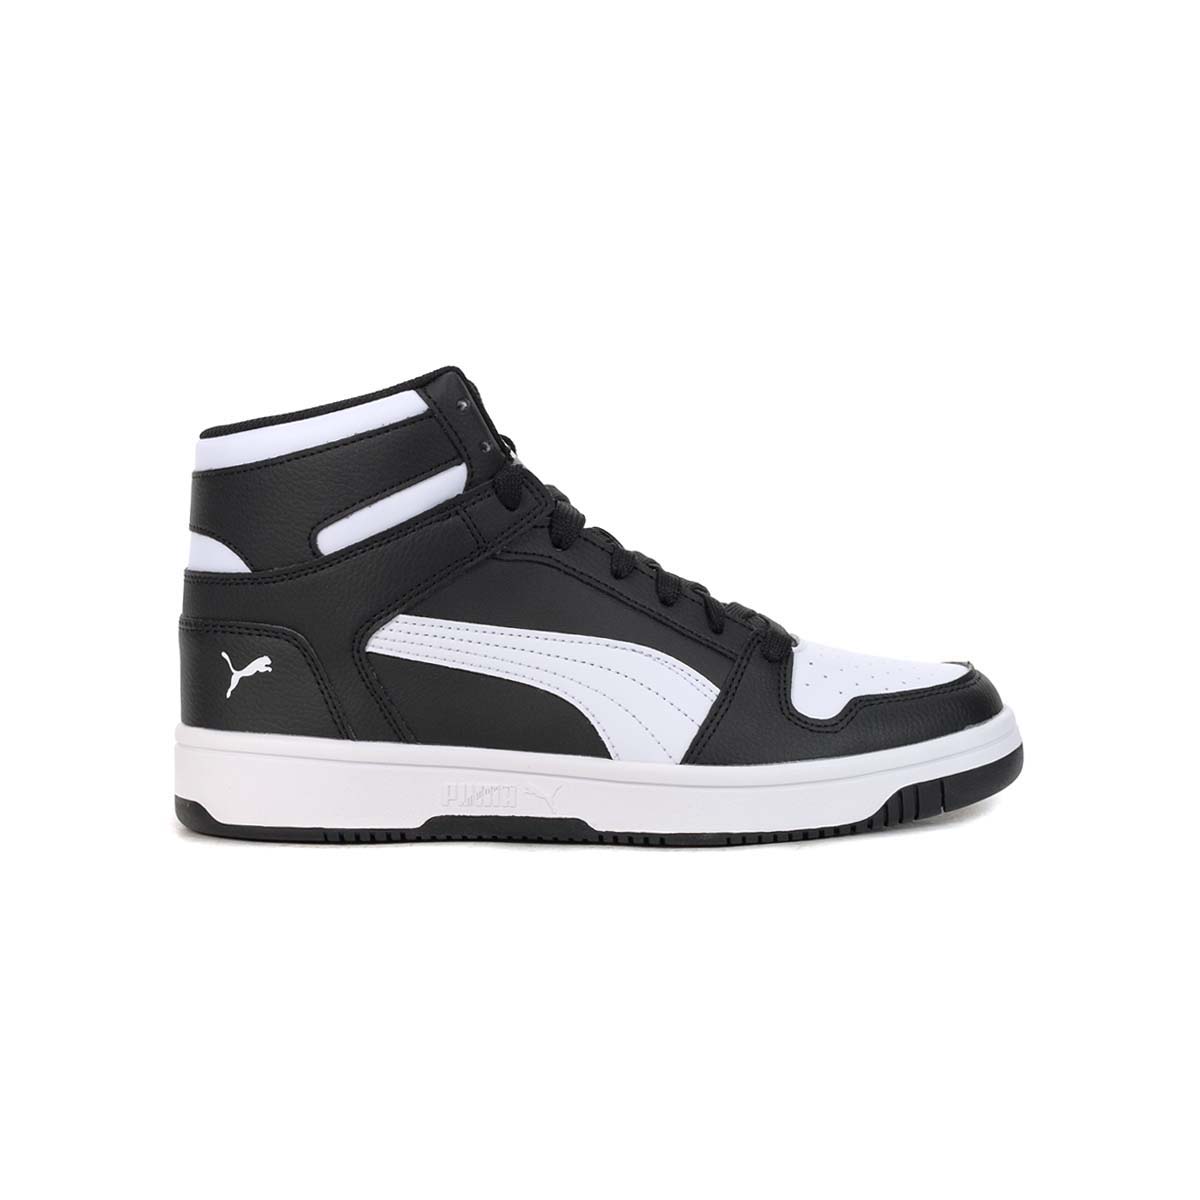 PUMA Women's Rebound LayUp SL Black/White Sneakers 36957301 - WOOKI.COM